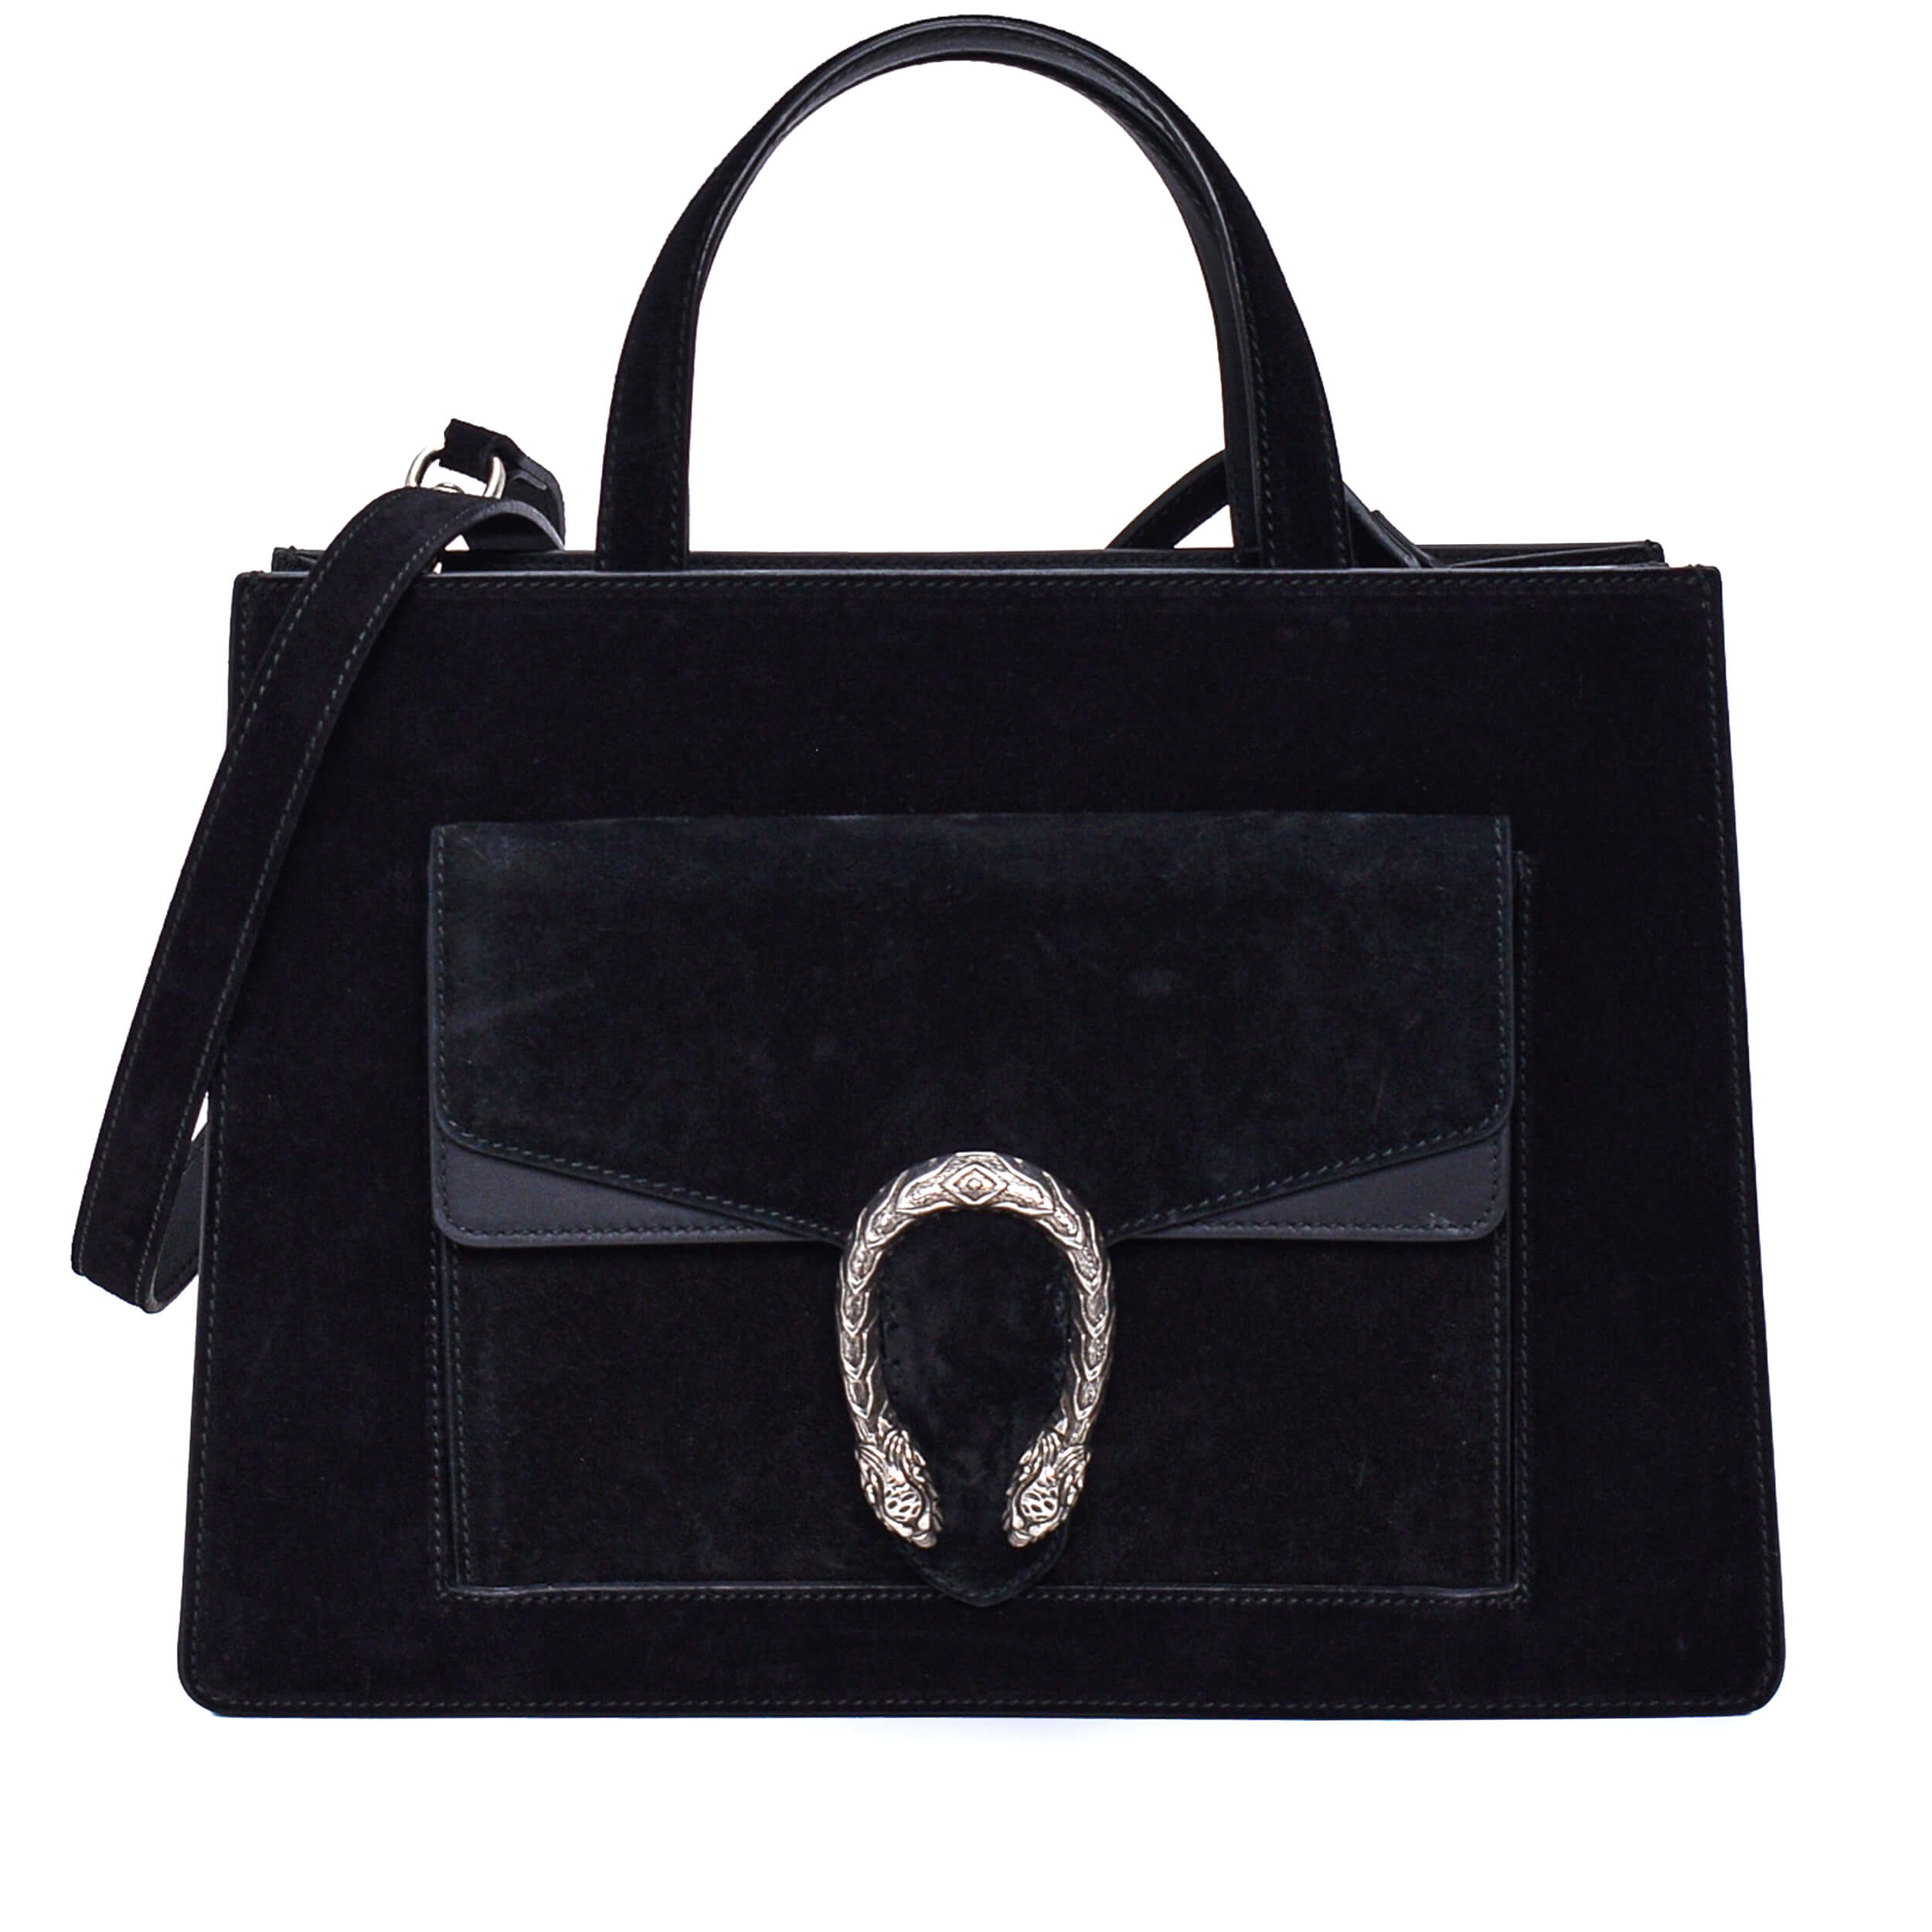 Gucci - Black Suede Dionysus Top Handle Bag